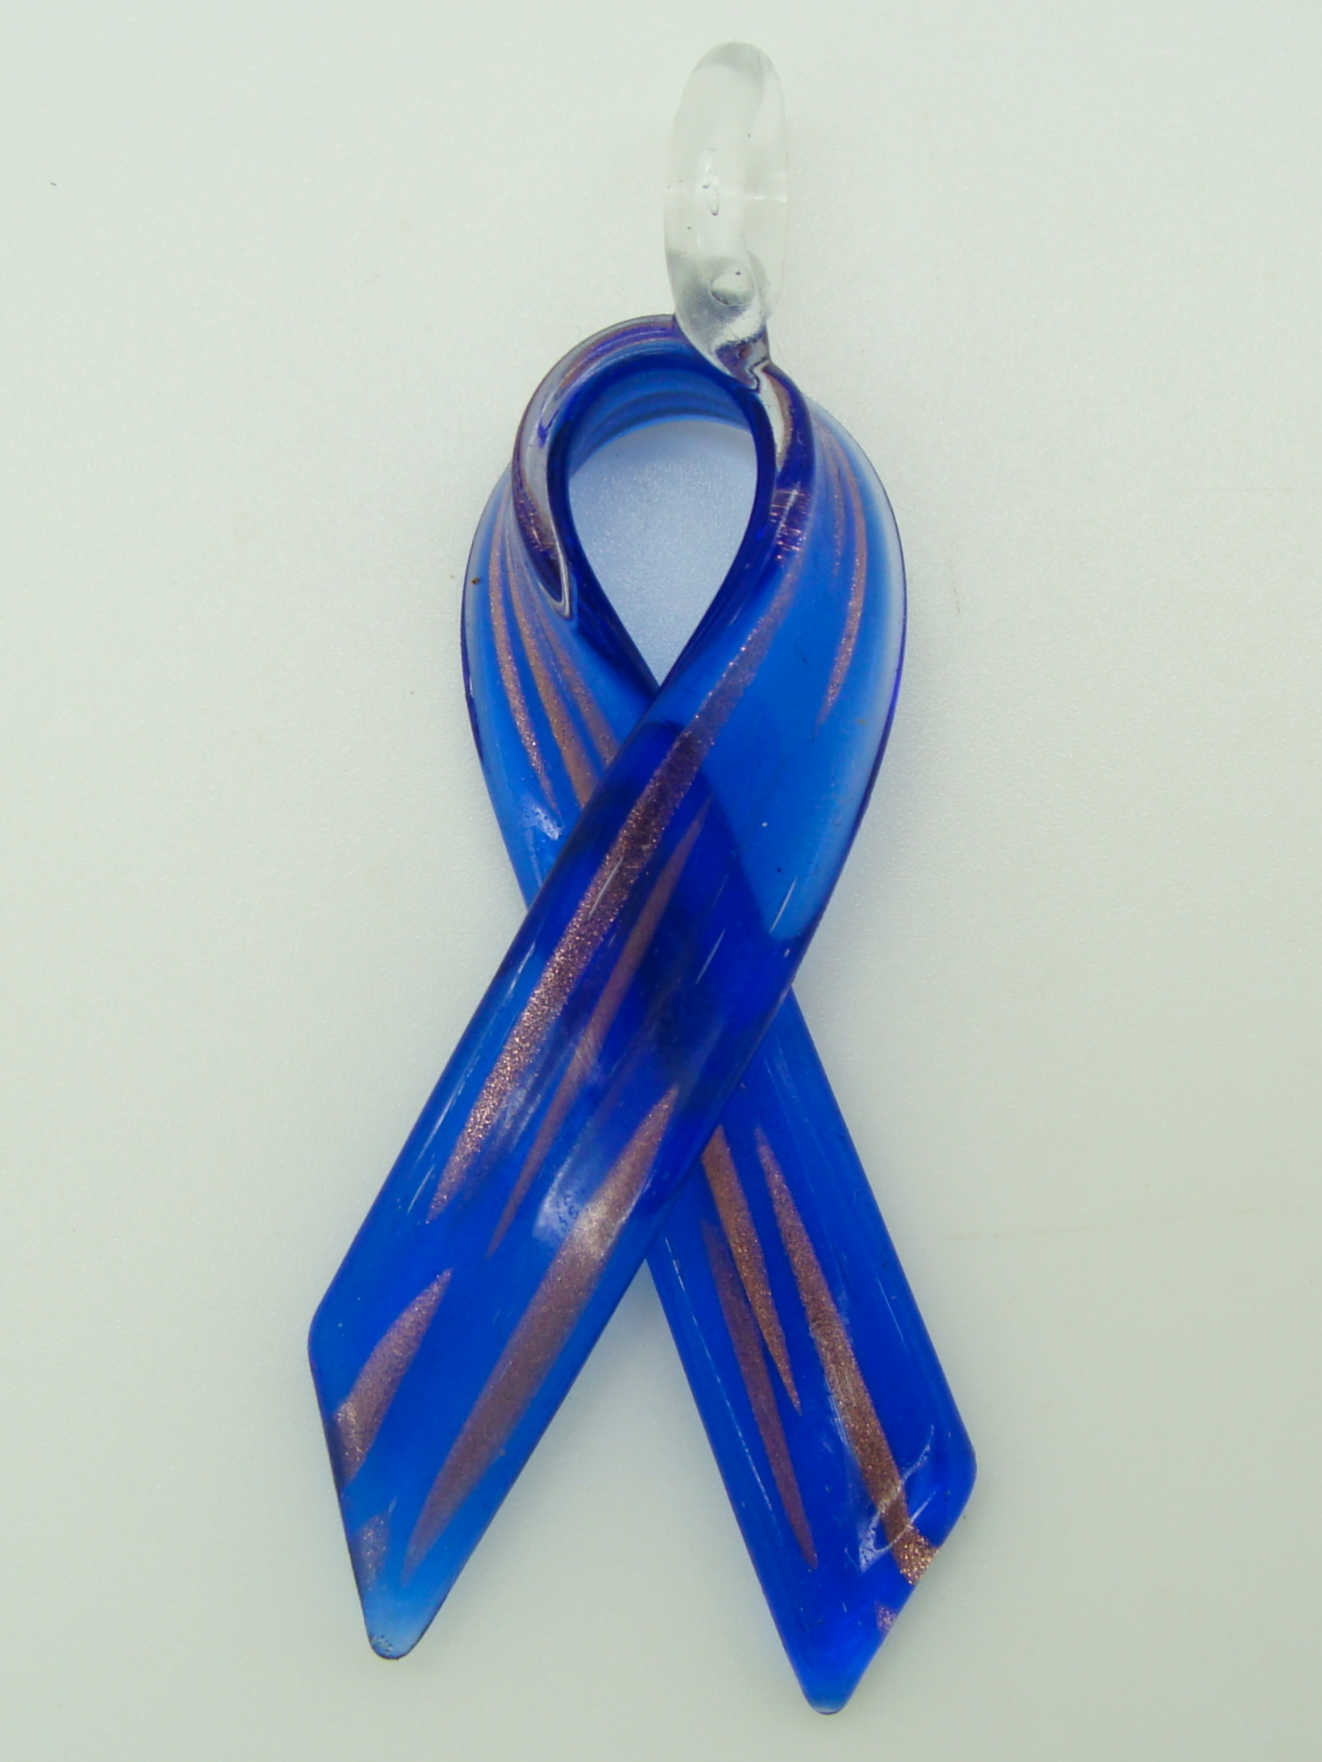 Pend-332-1 pendentif ruban verre fin bleu fonce noeud